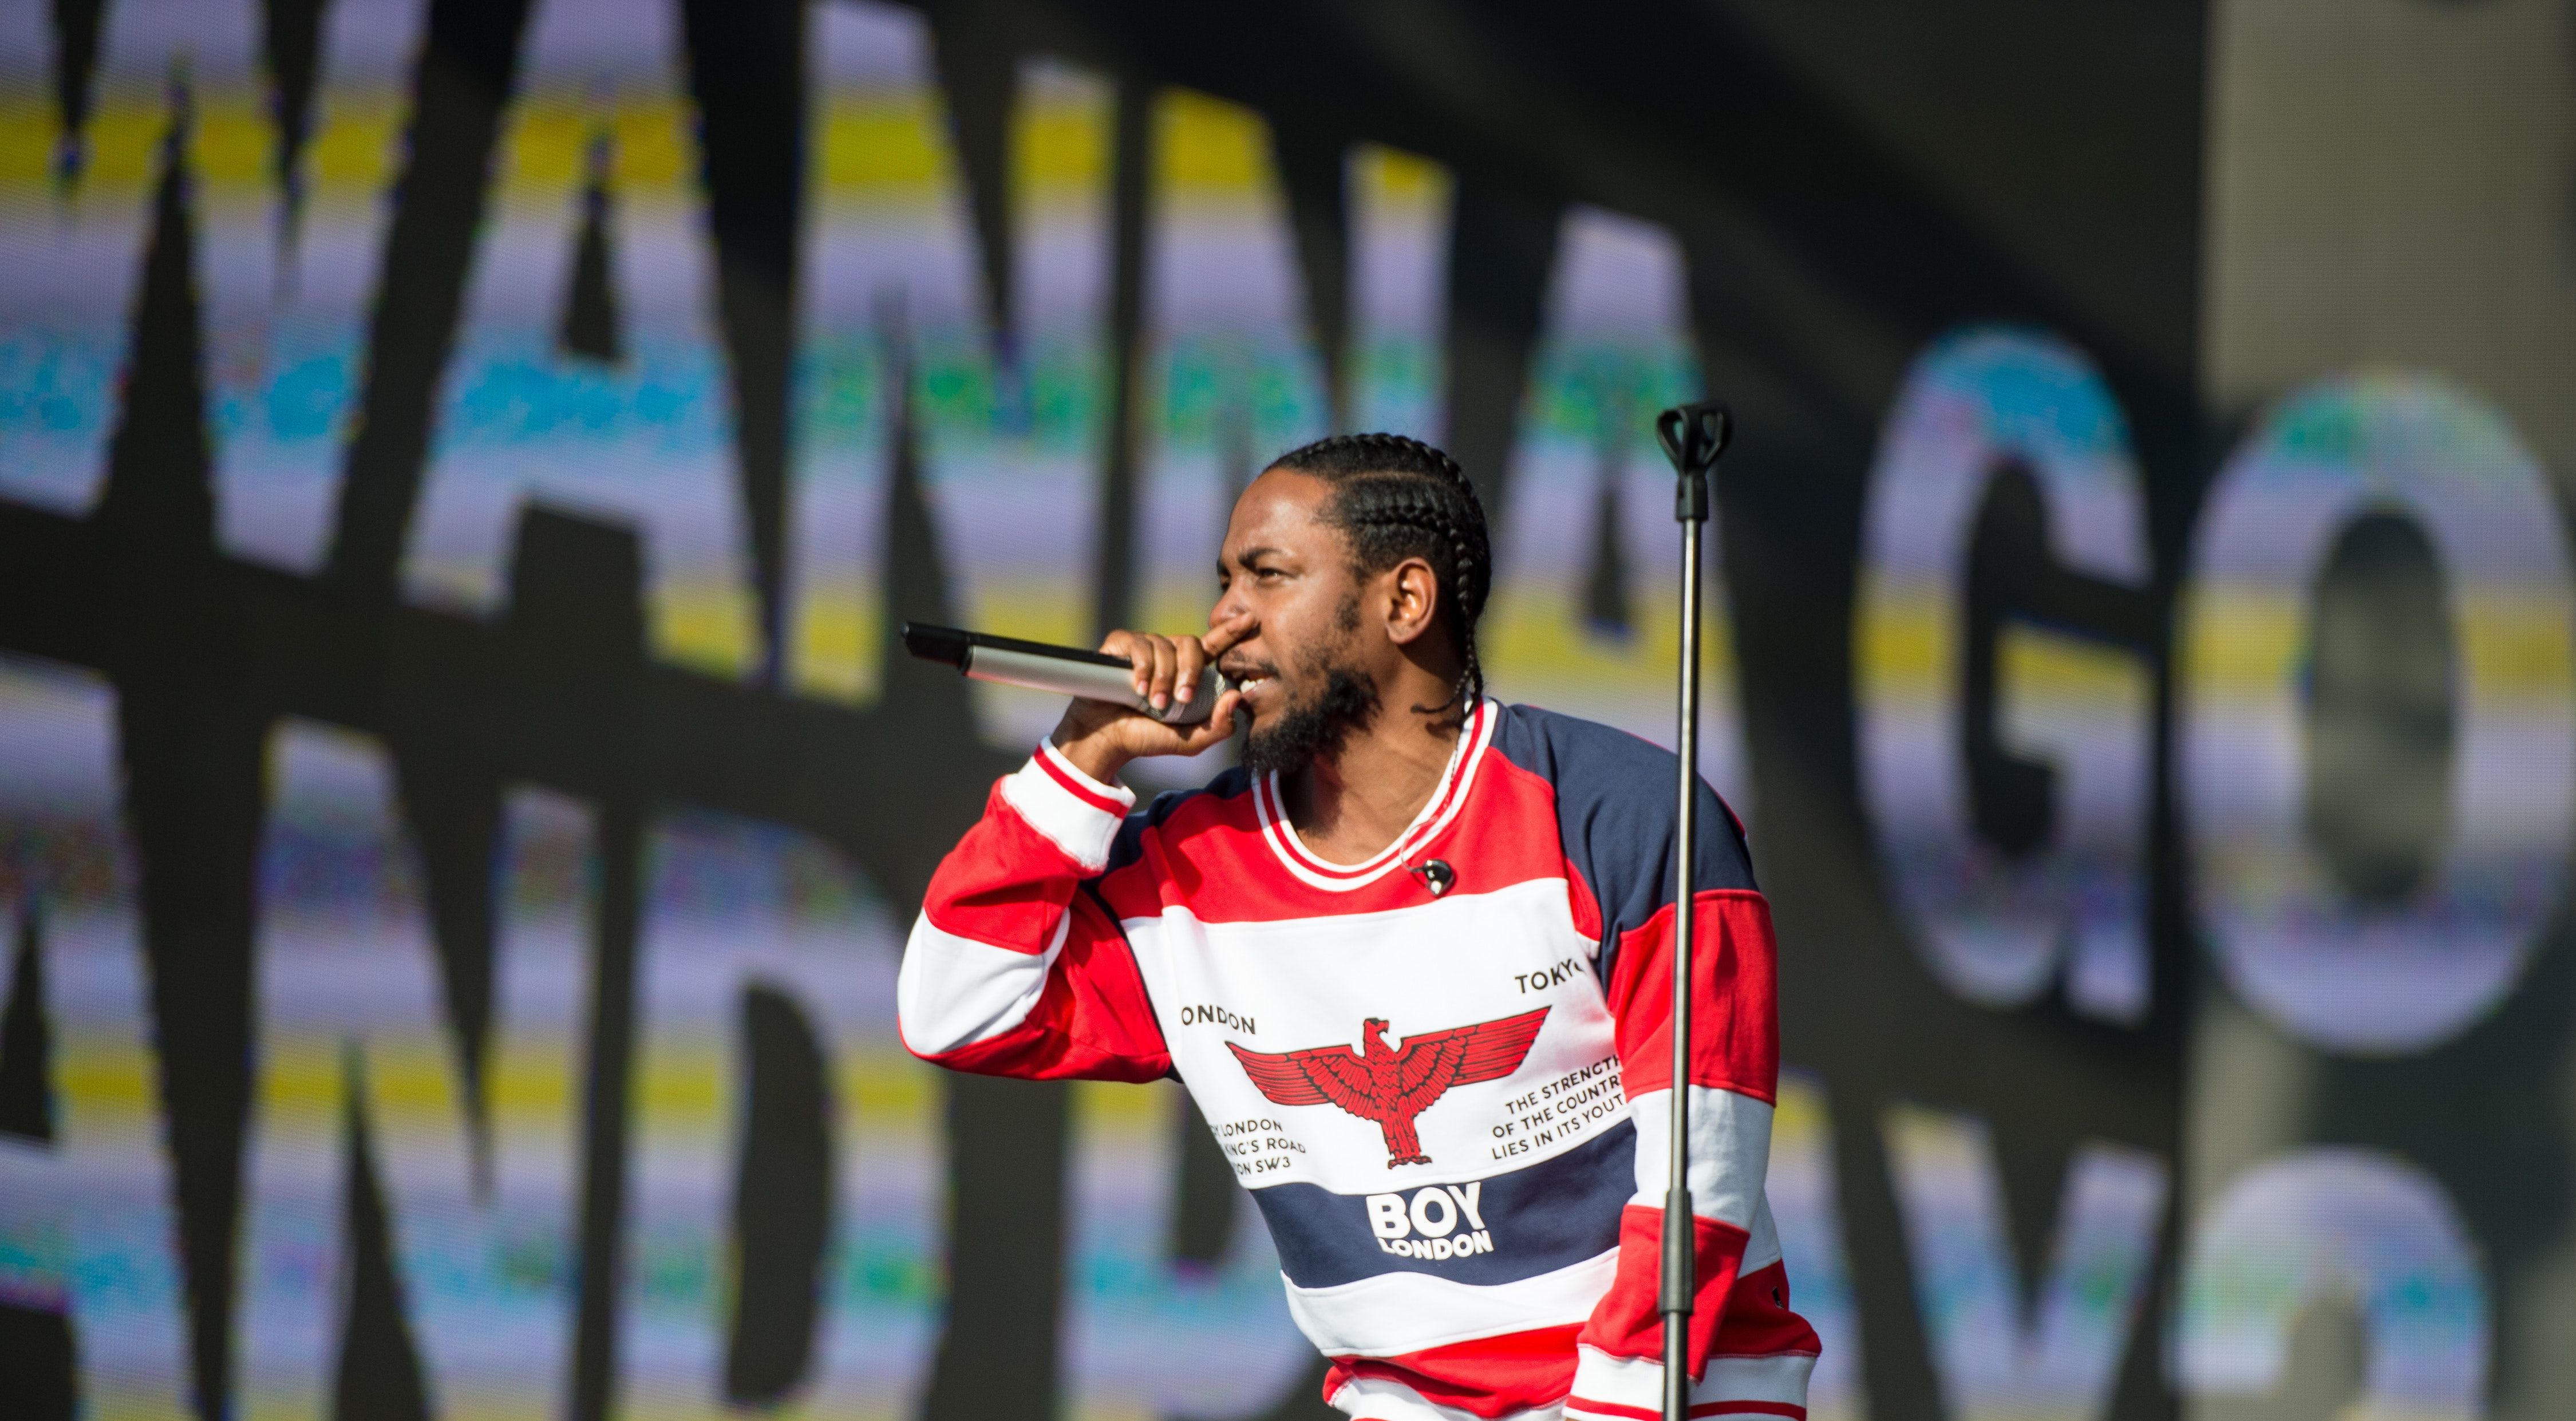 Grammys rap categories: Kendrick Lamar is front-runner to win